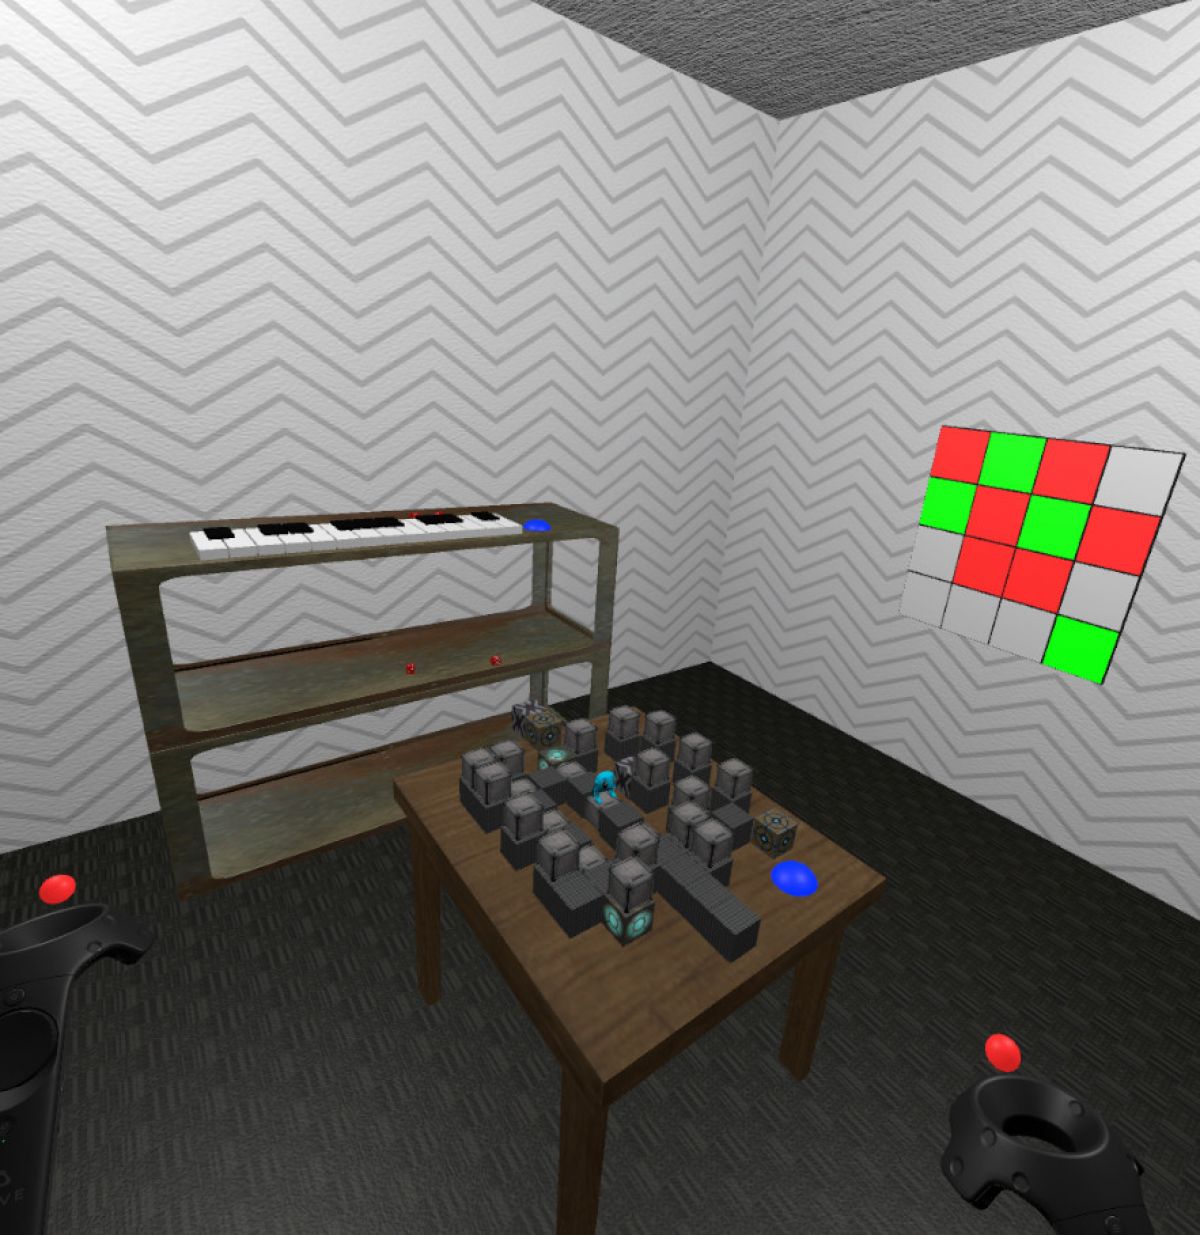 12 комнат игры. VR комната. Игра про комнаты с головоломками. VR игра Room. Игра головоломка the Room.